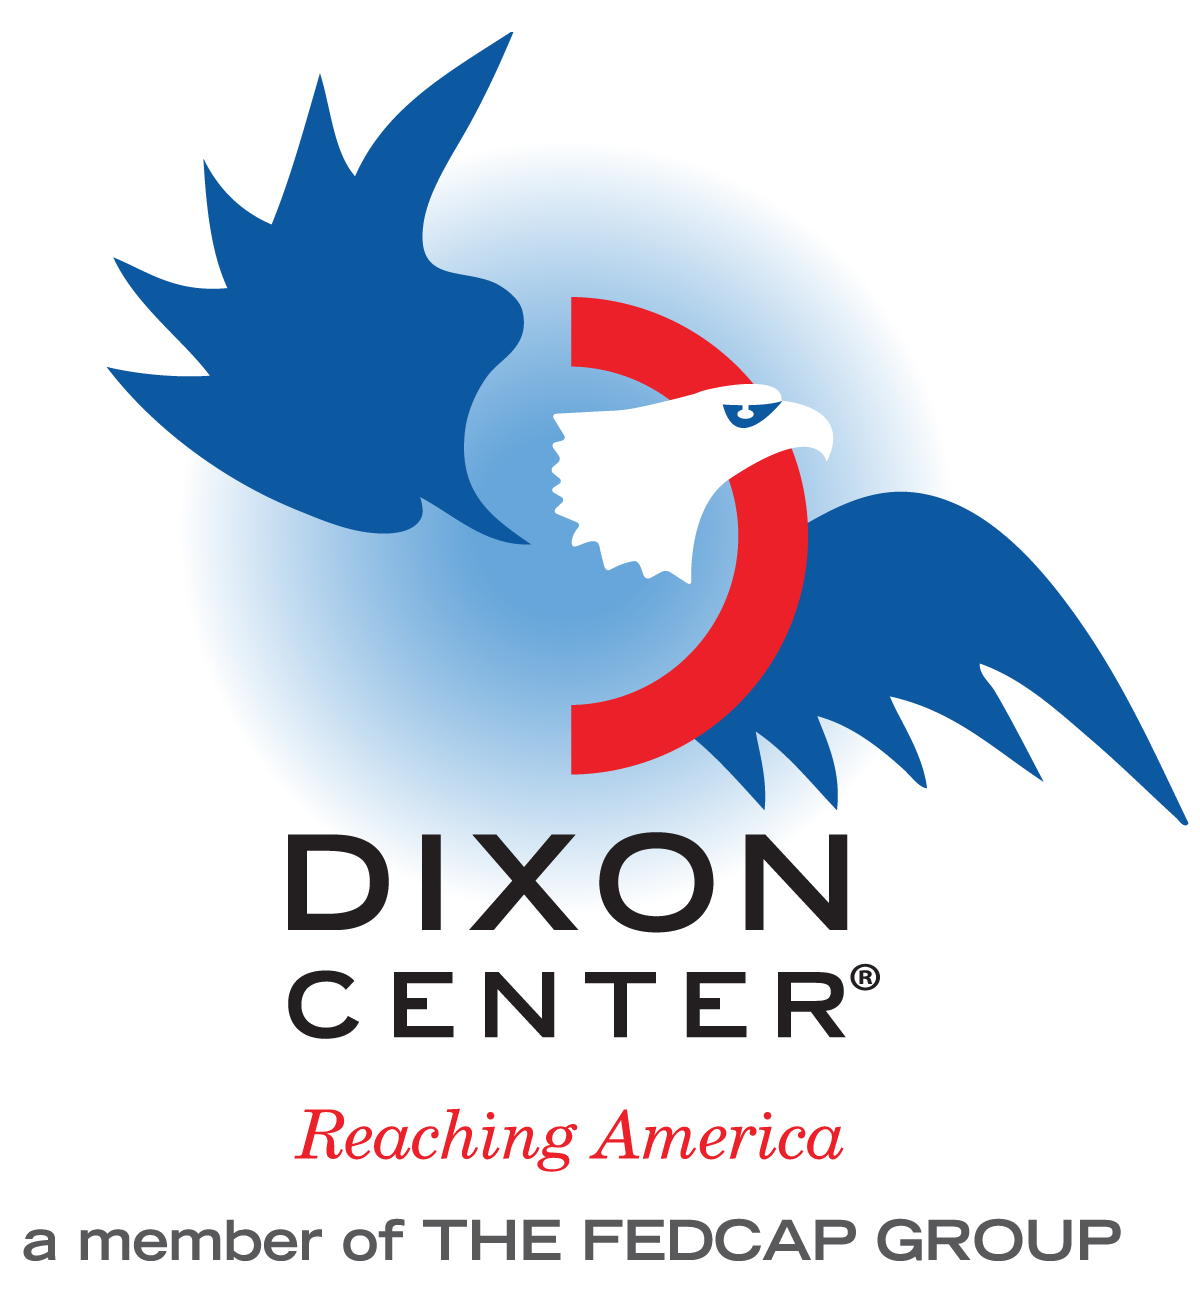 Dixon Center - Reaching America logo